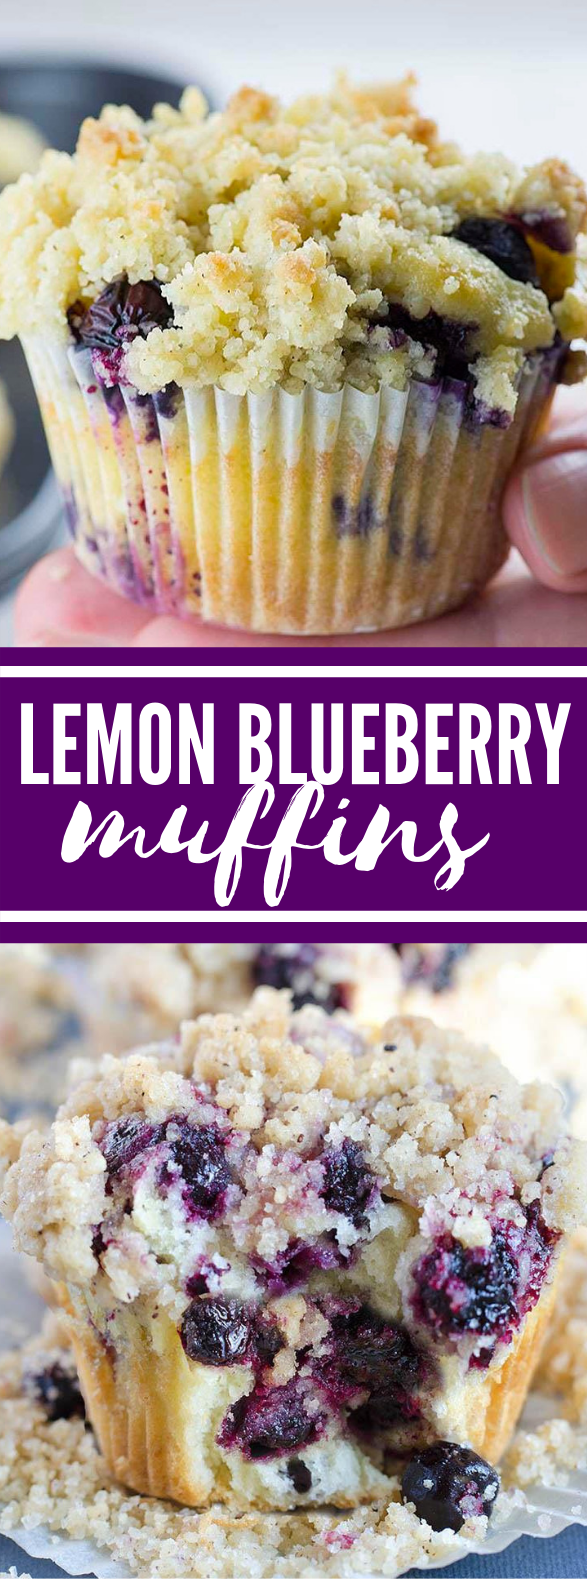 Lemon Blueberry Muffins #desserts #breakfast